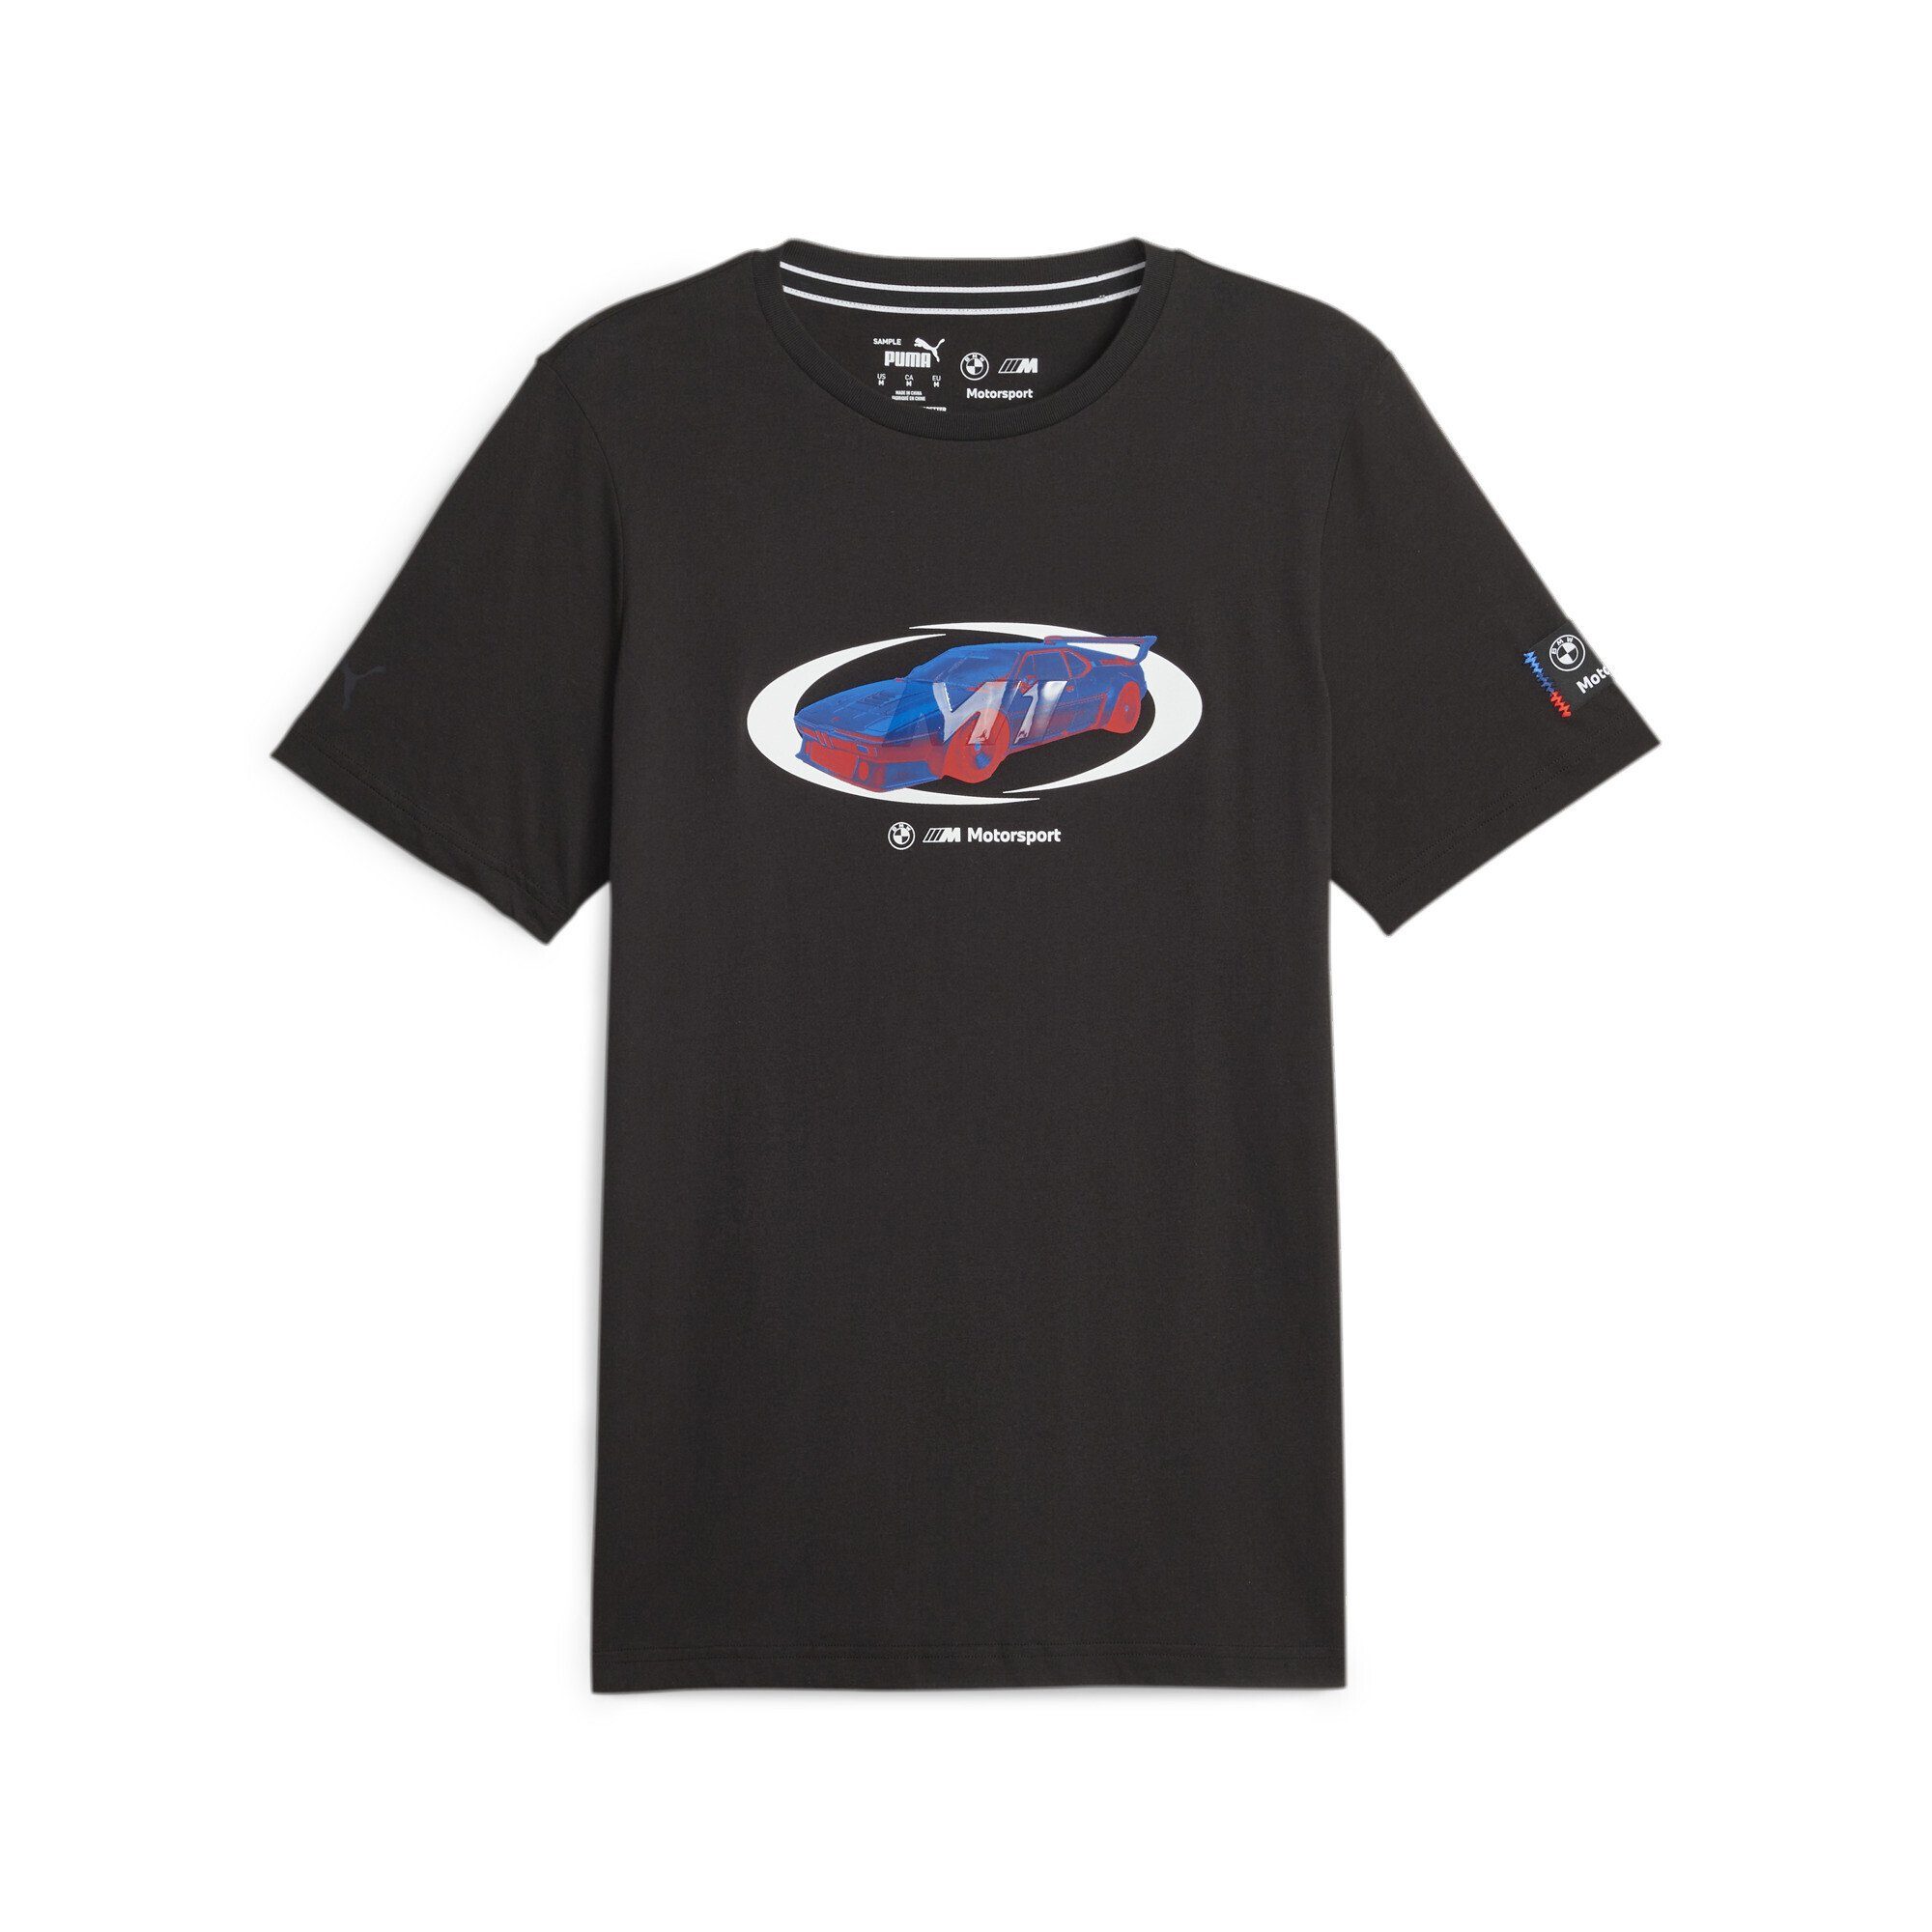 PUMA T-Shirt BMW M T-Shirt Herren Black Car Motorsport Statement